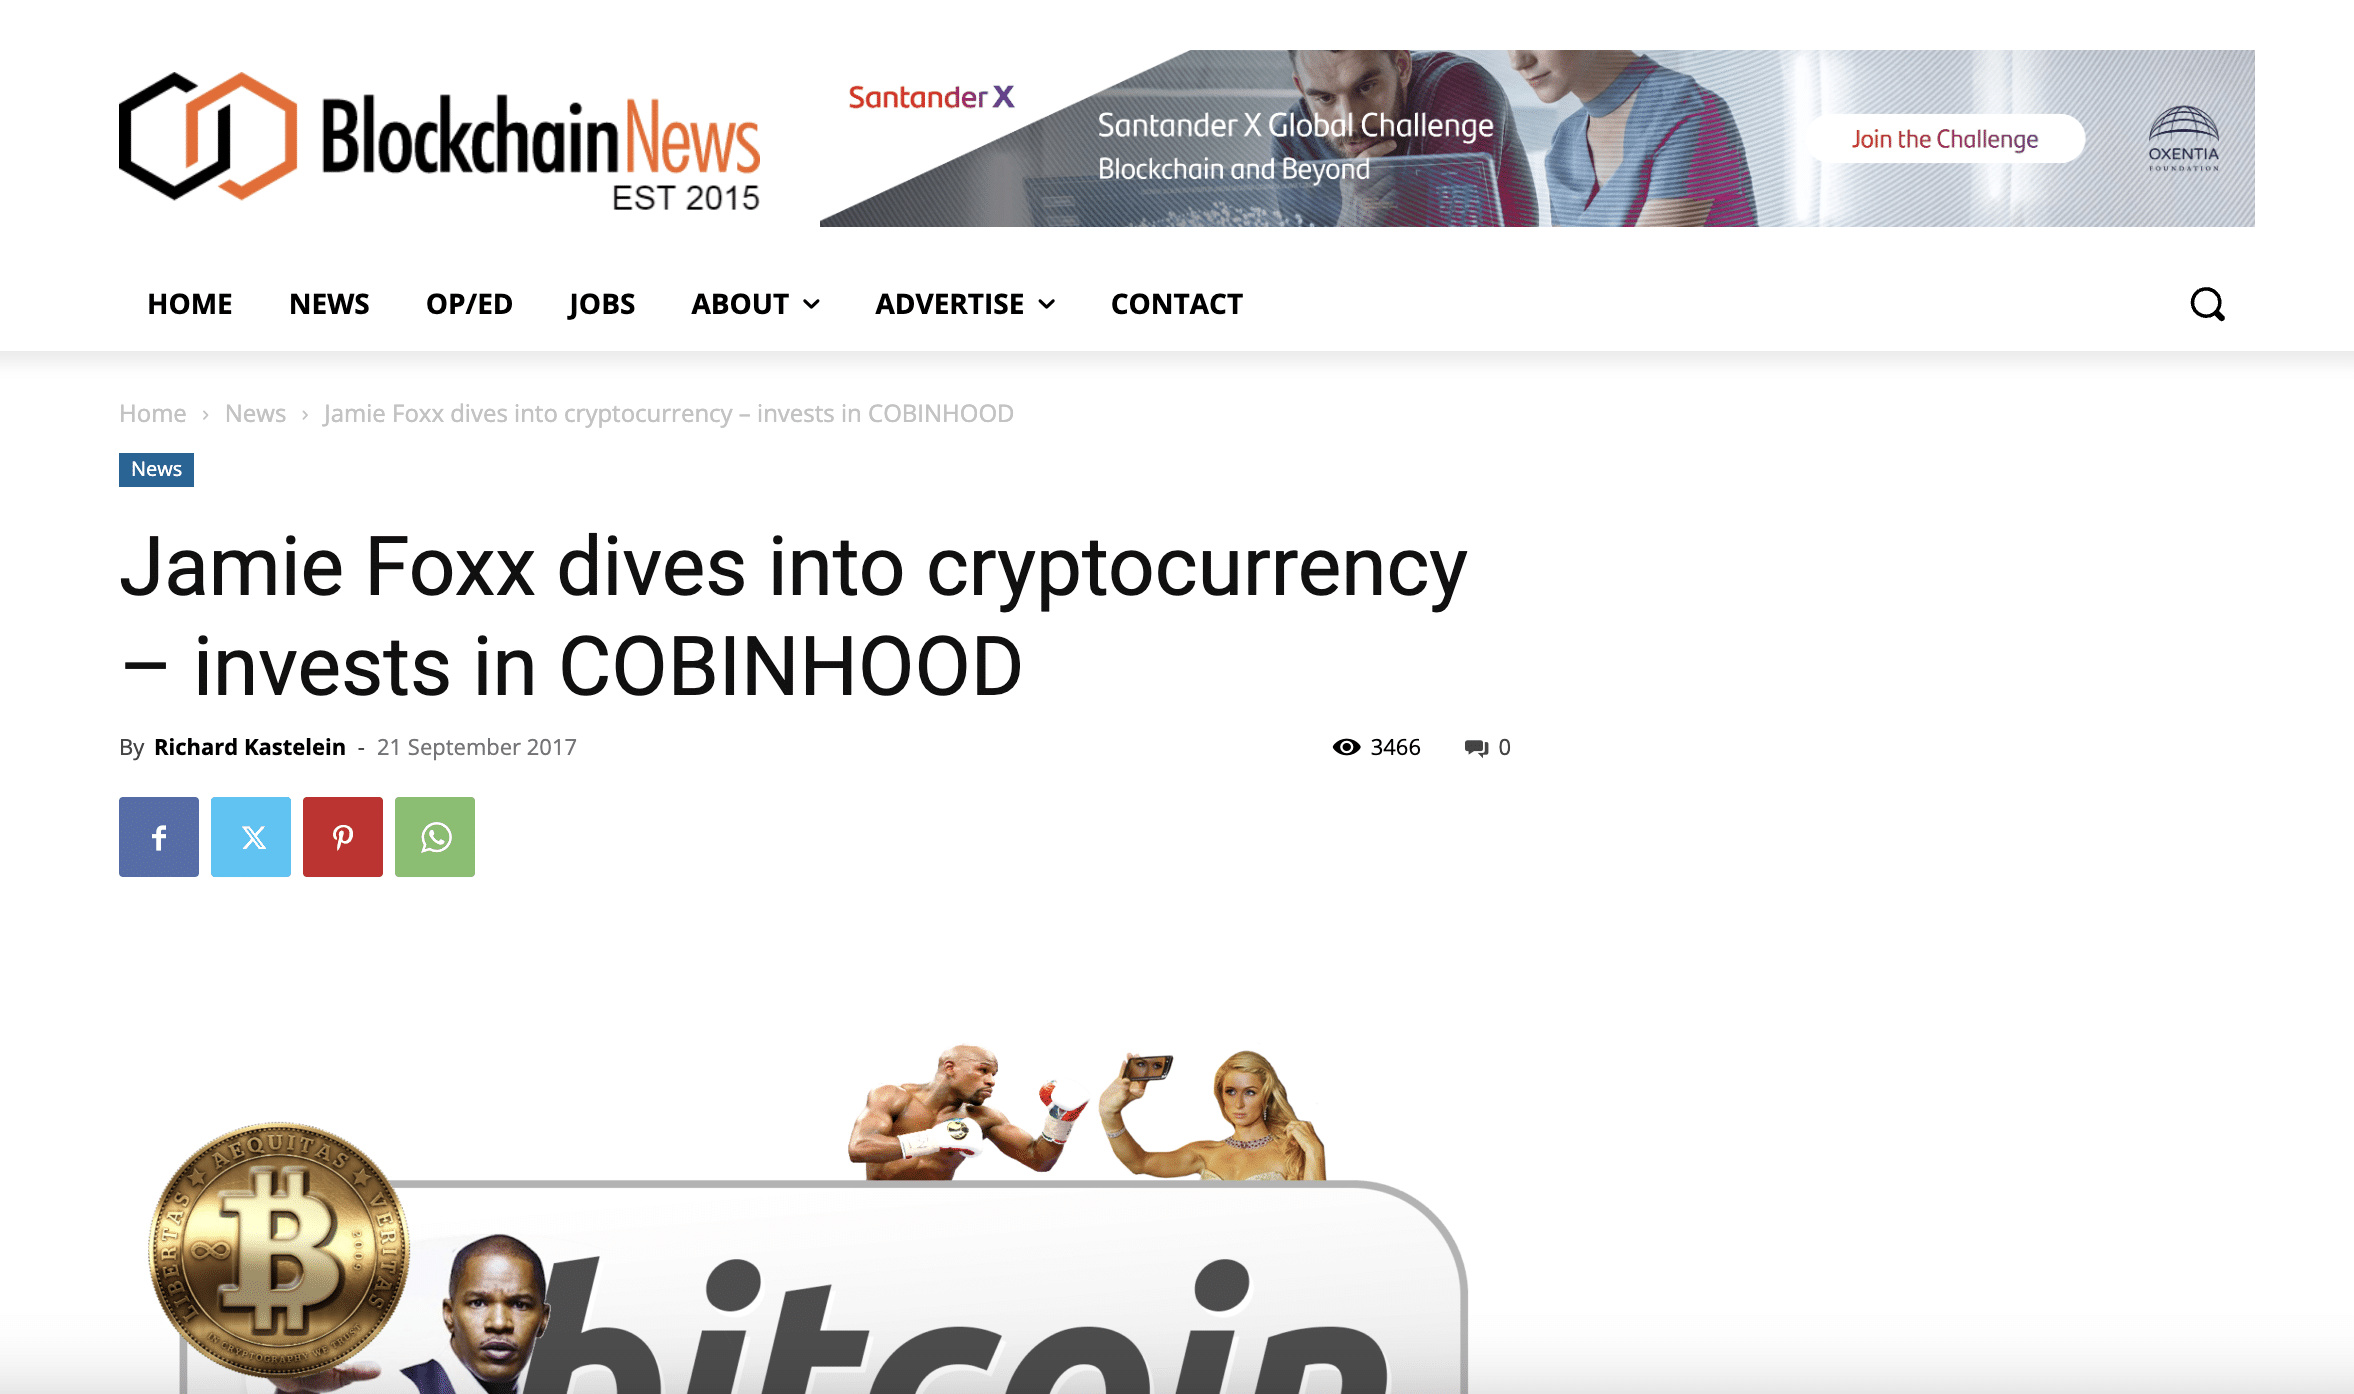 An article on BlockchainNews